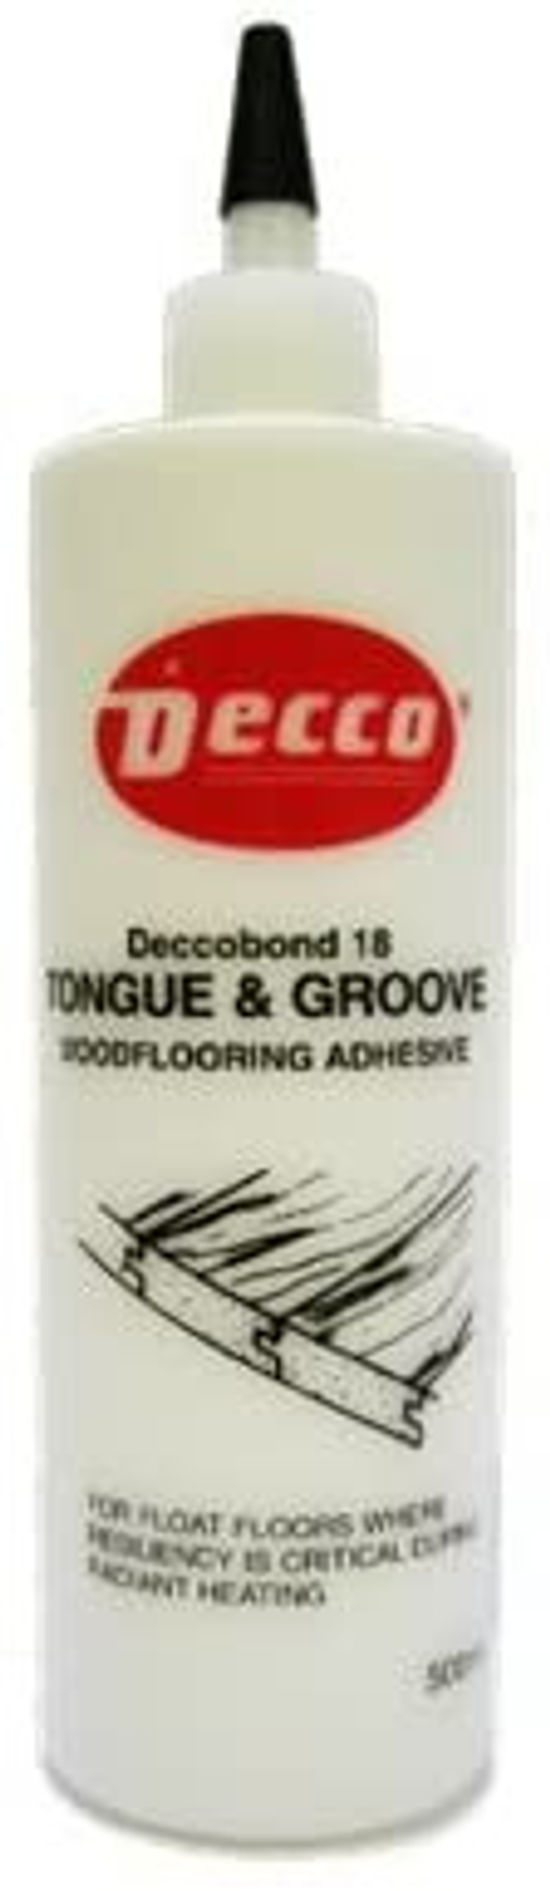 Deccobond 18 Tongue & Groove Wood Flooring Adhesive - 500 ml